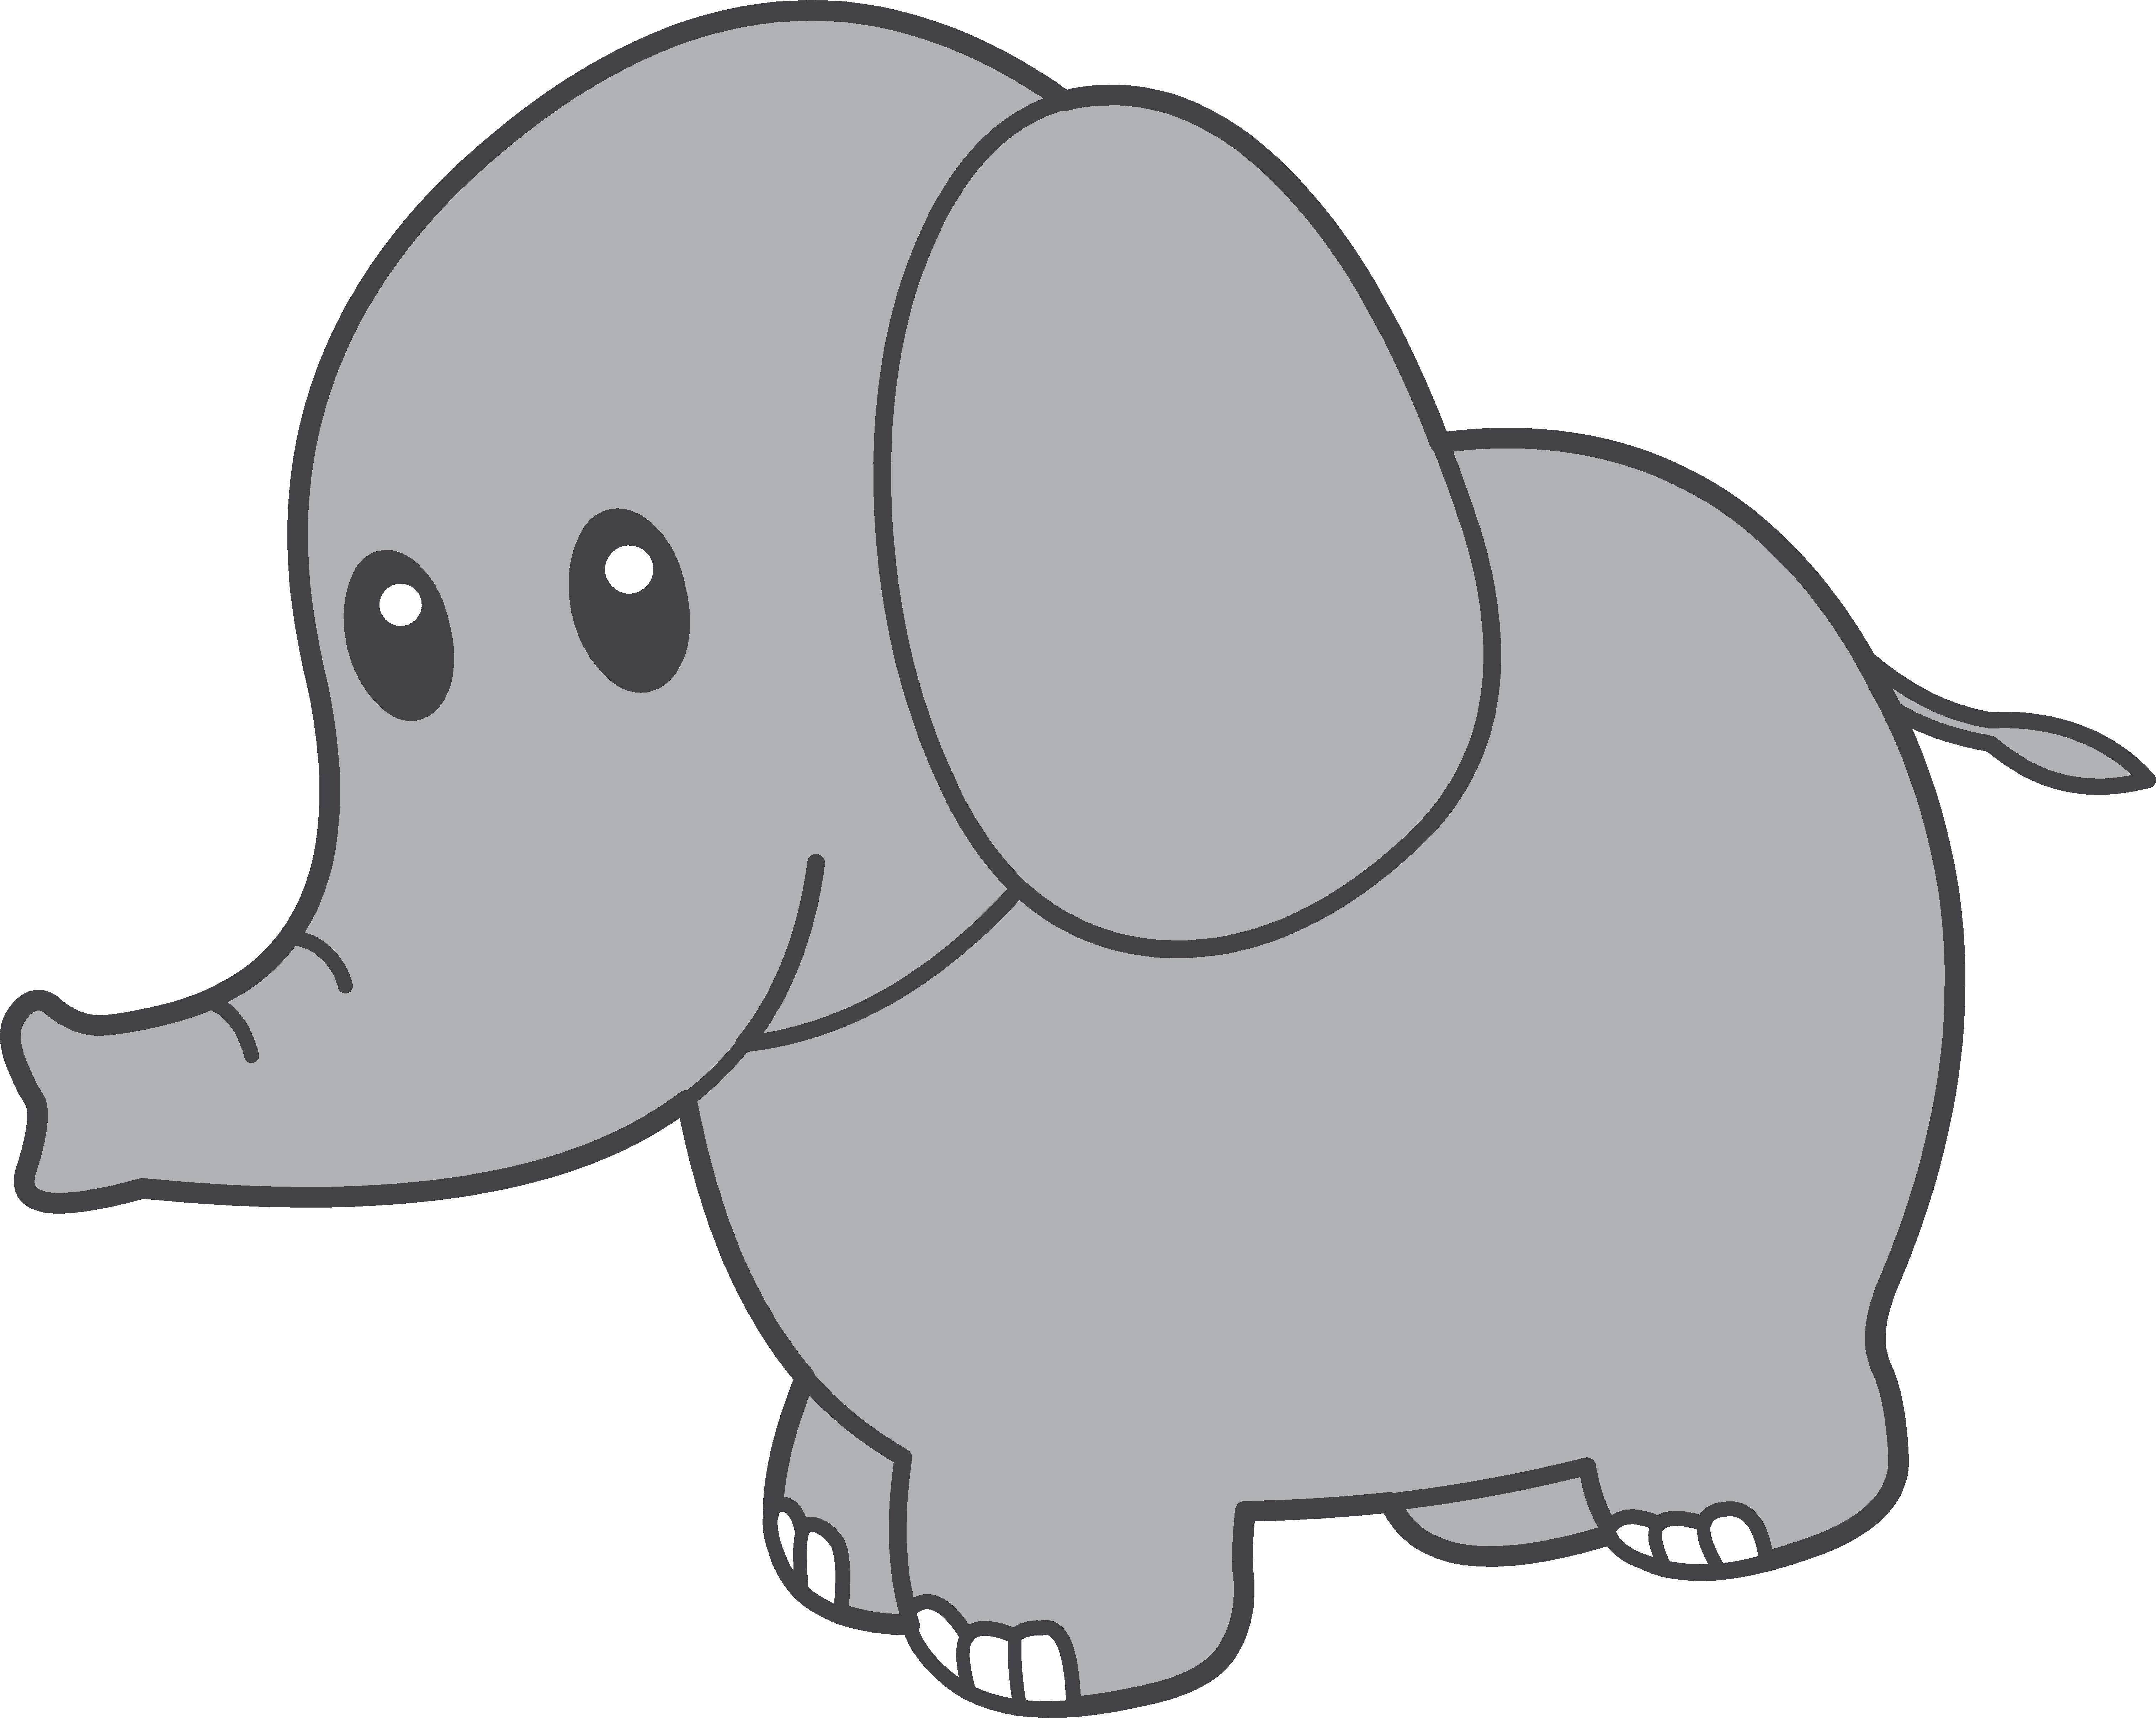 elephants clipart template